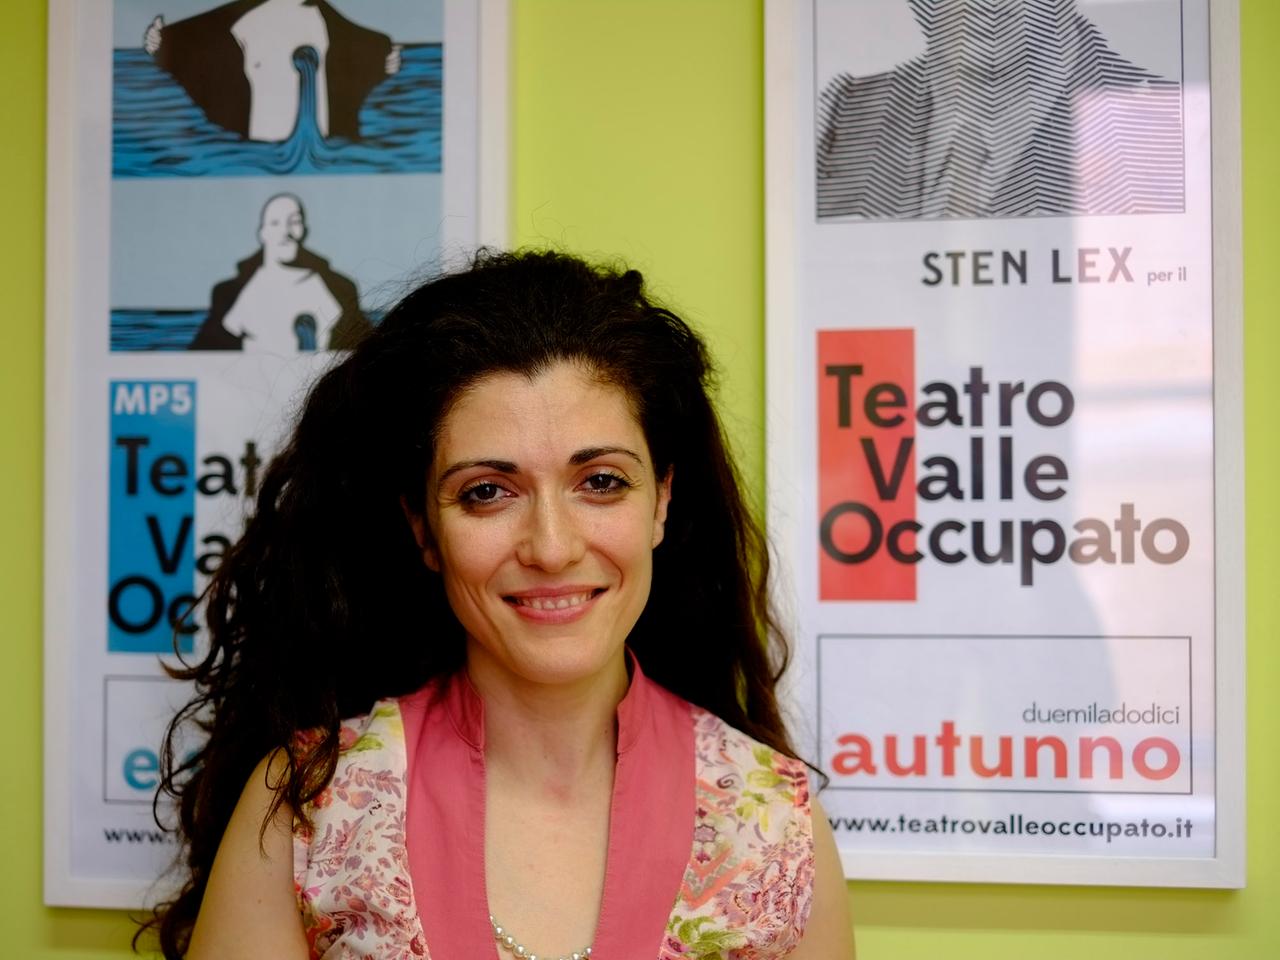 Francesca Romana De Santis, Schauspielerin und Aktivistin